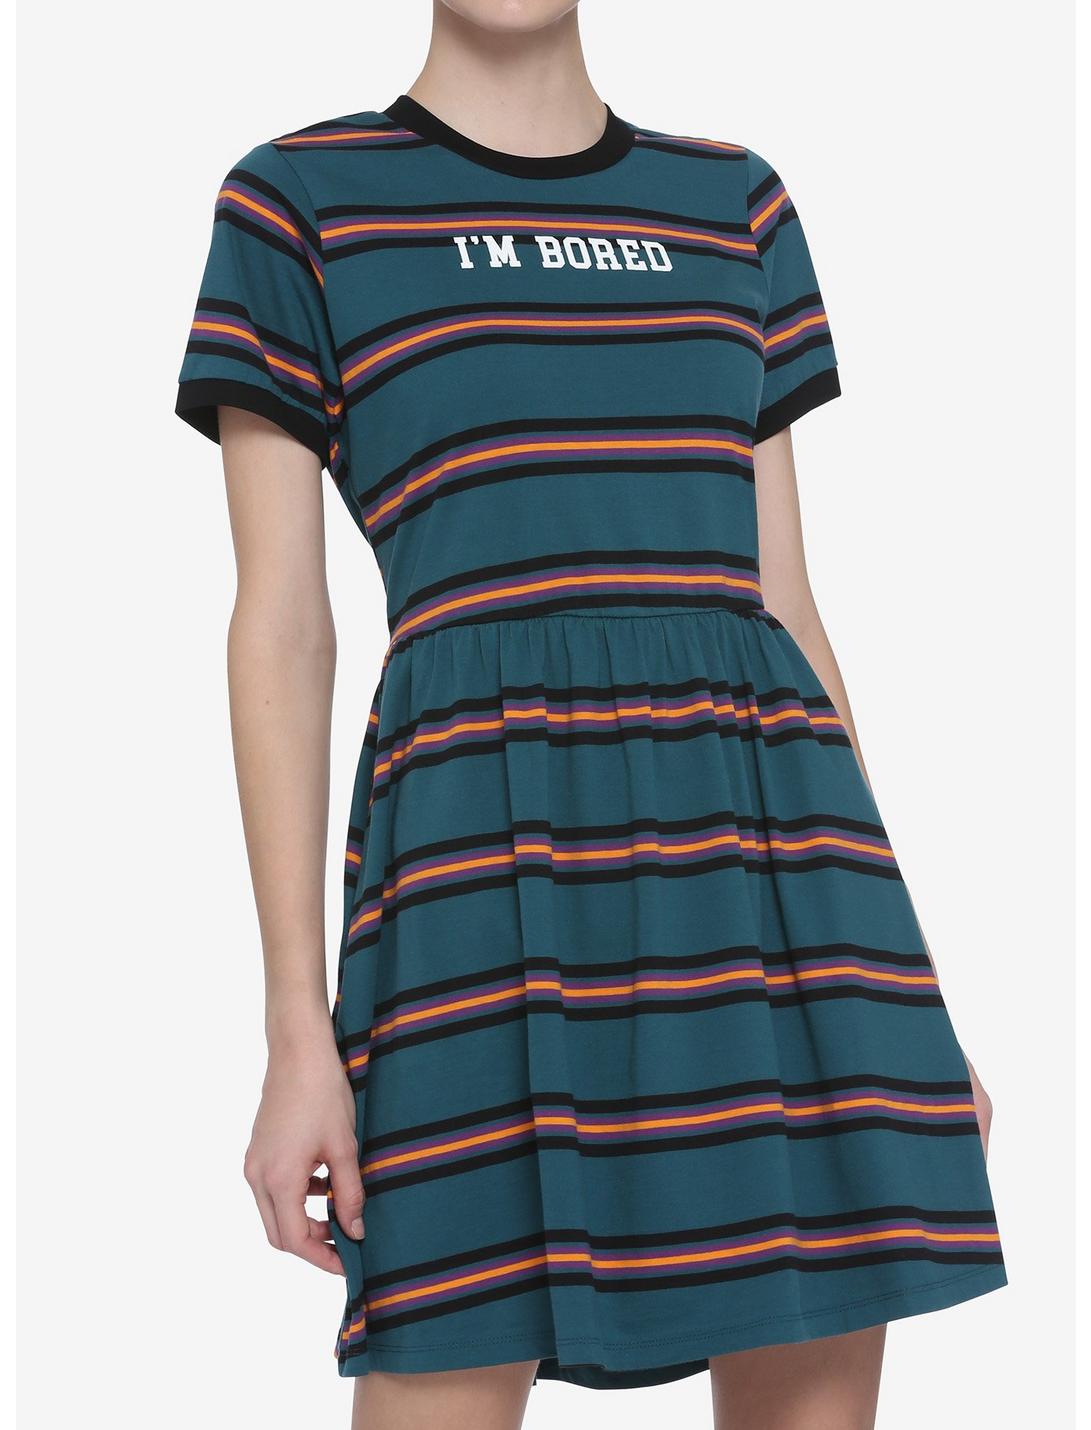 I'm Bored Stripe Ringer Dress, STRIPES, hi-res